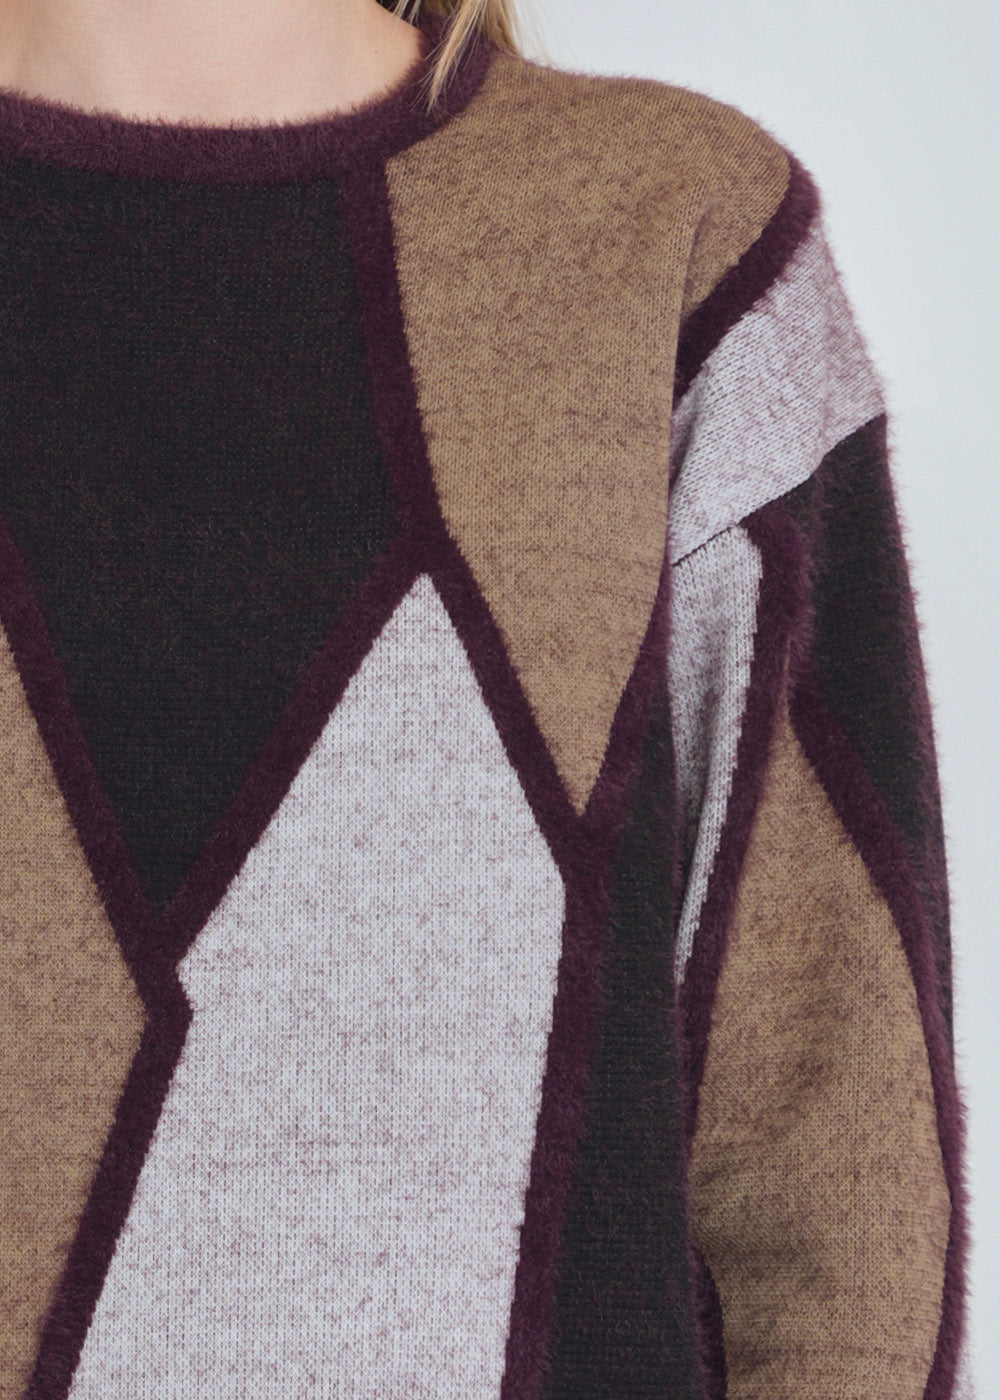 Mixed Hue Fuzzy Burgundy Sweater